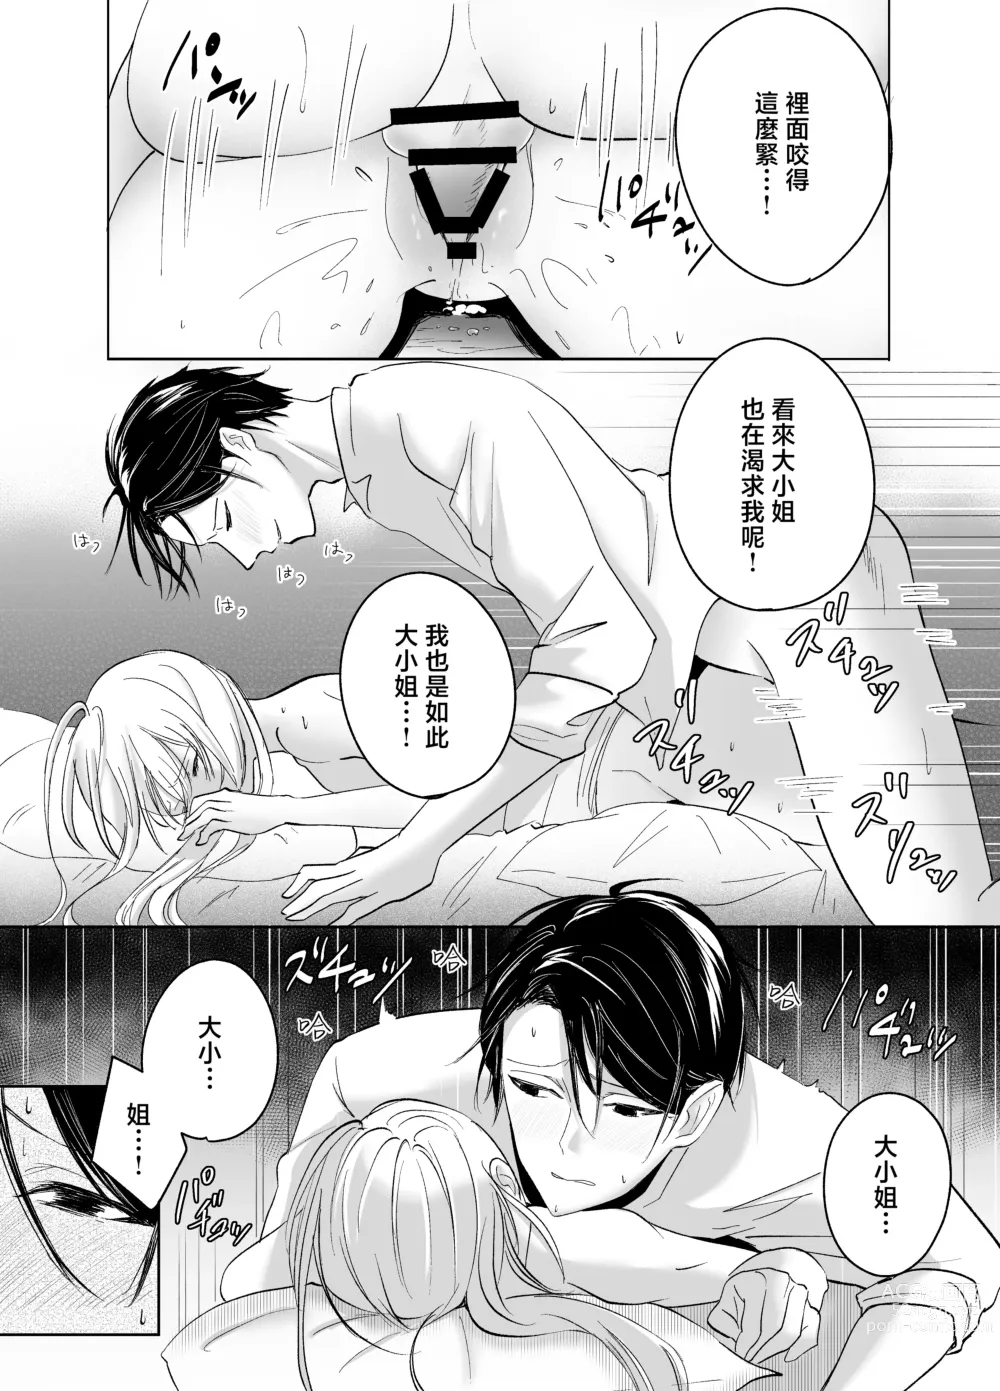 Page 14 of doujinshi 大小姐，抱歉打扰您就寝